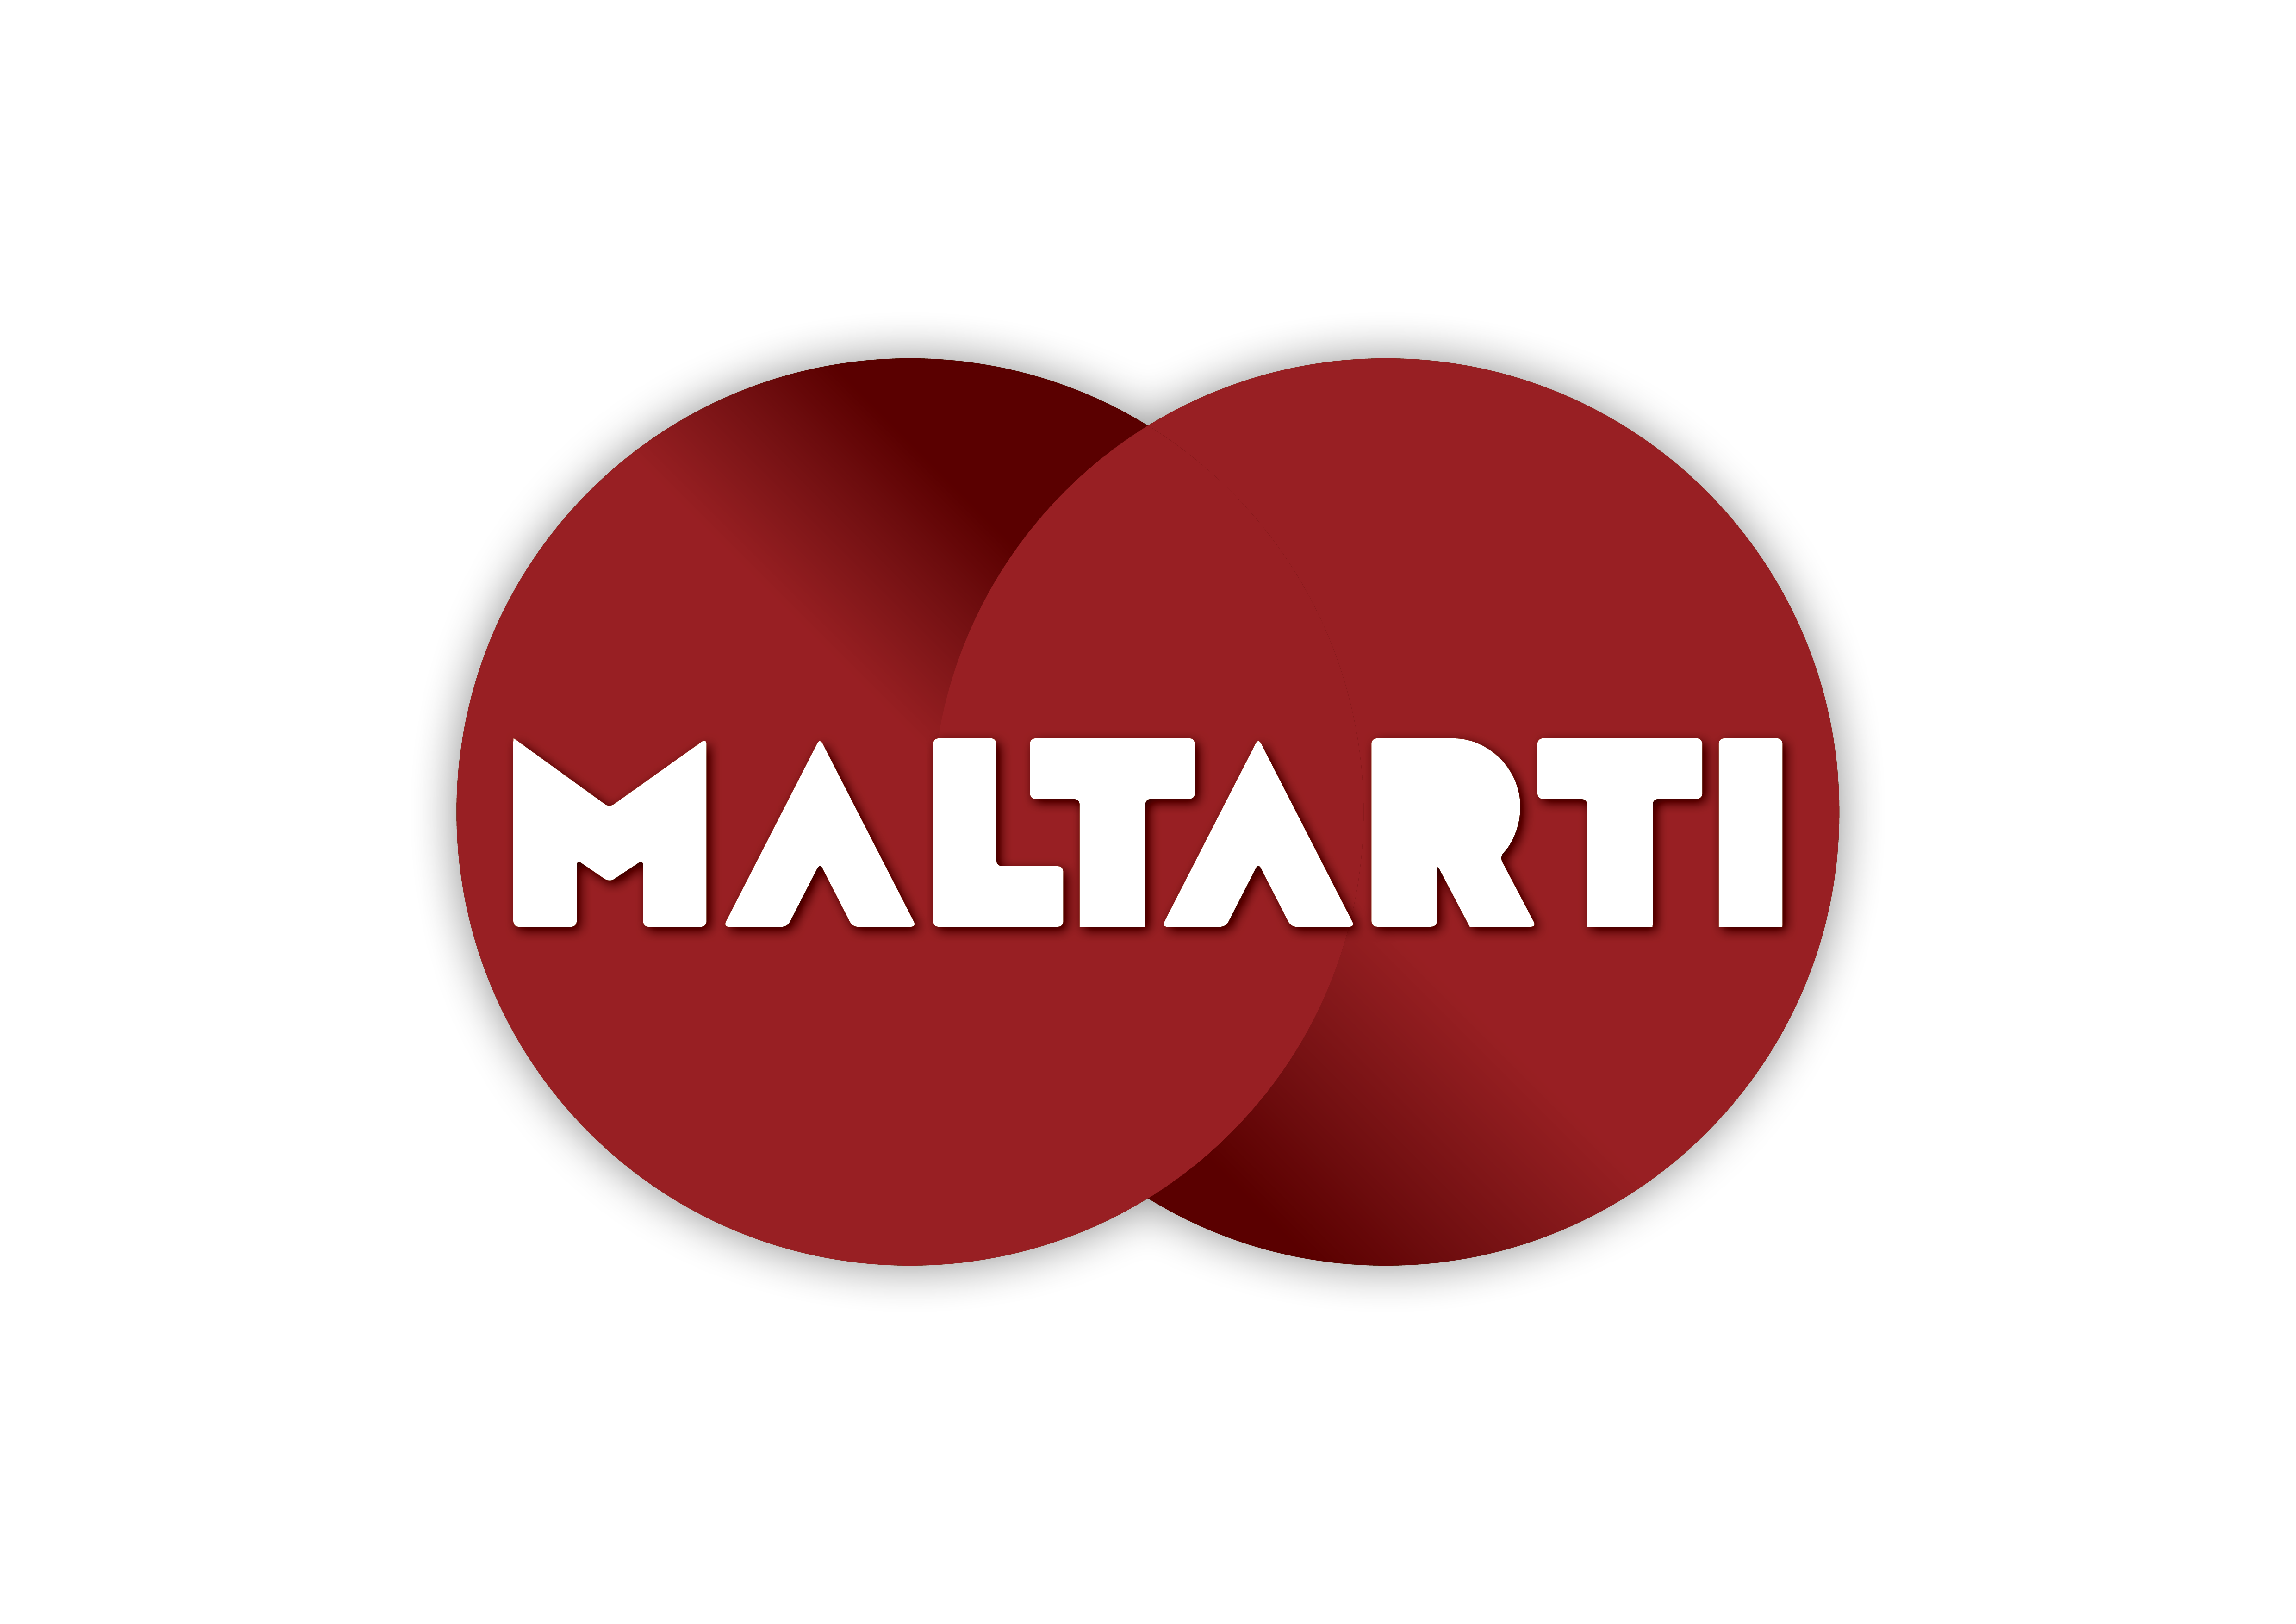 Maltarti